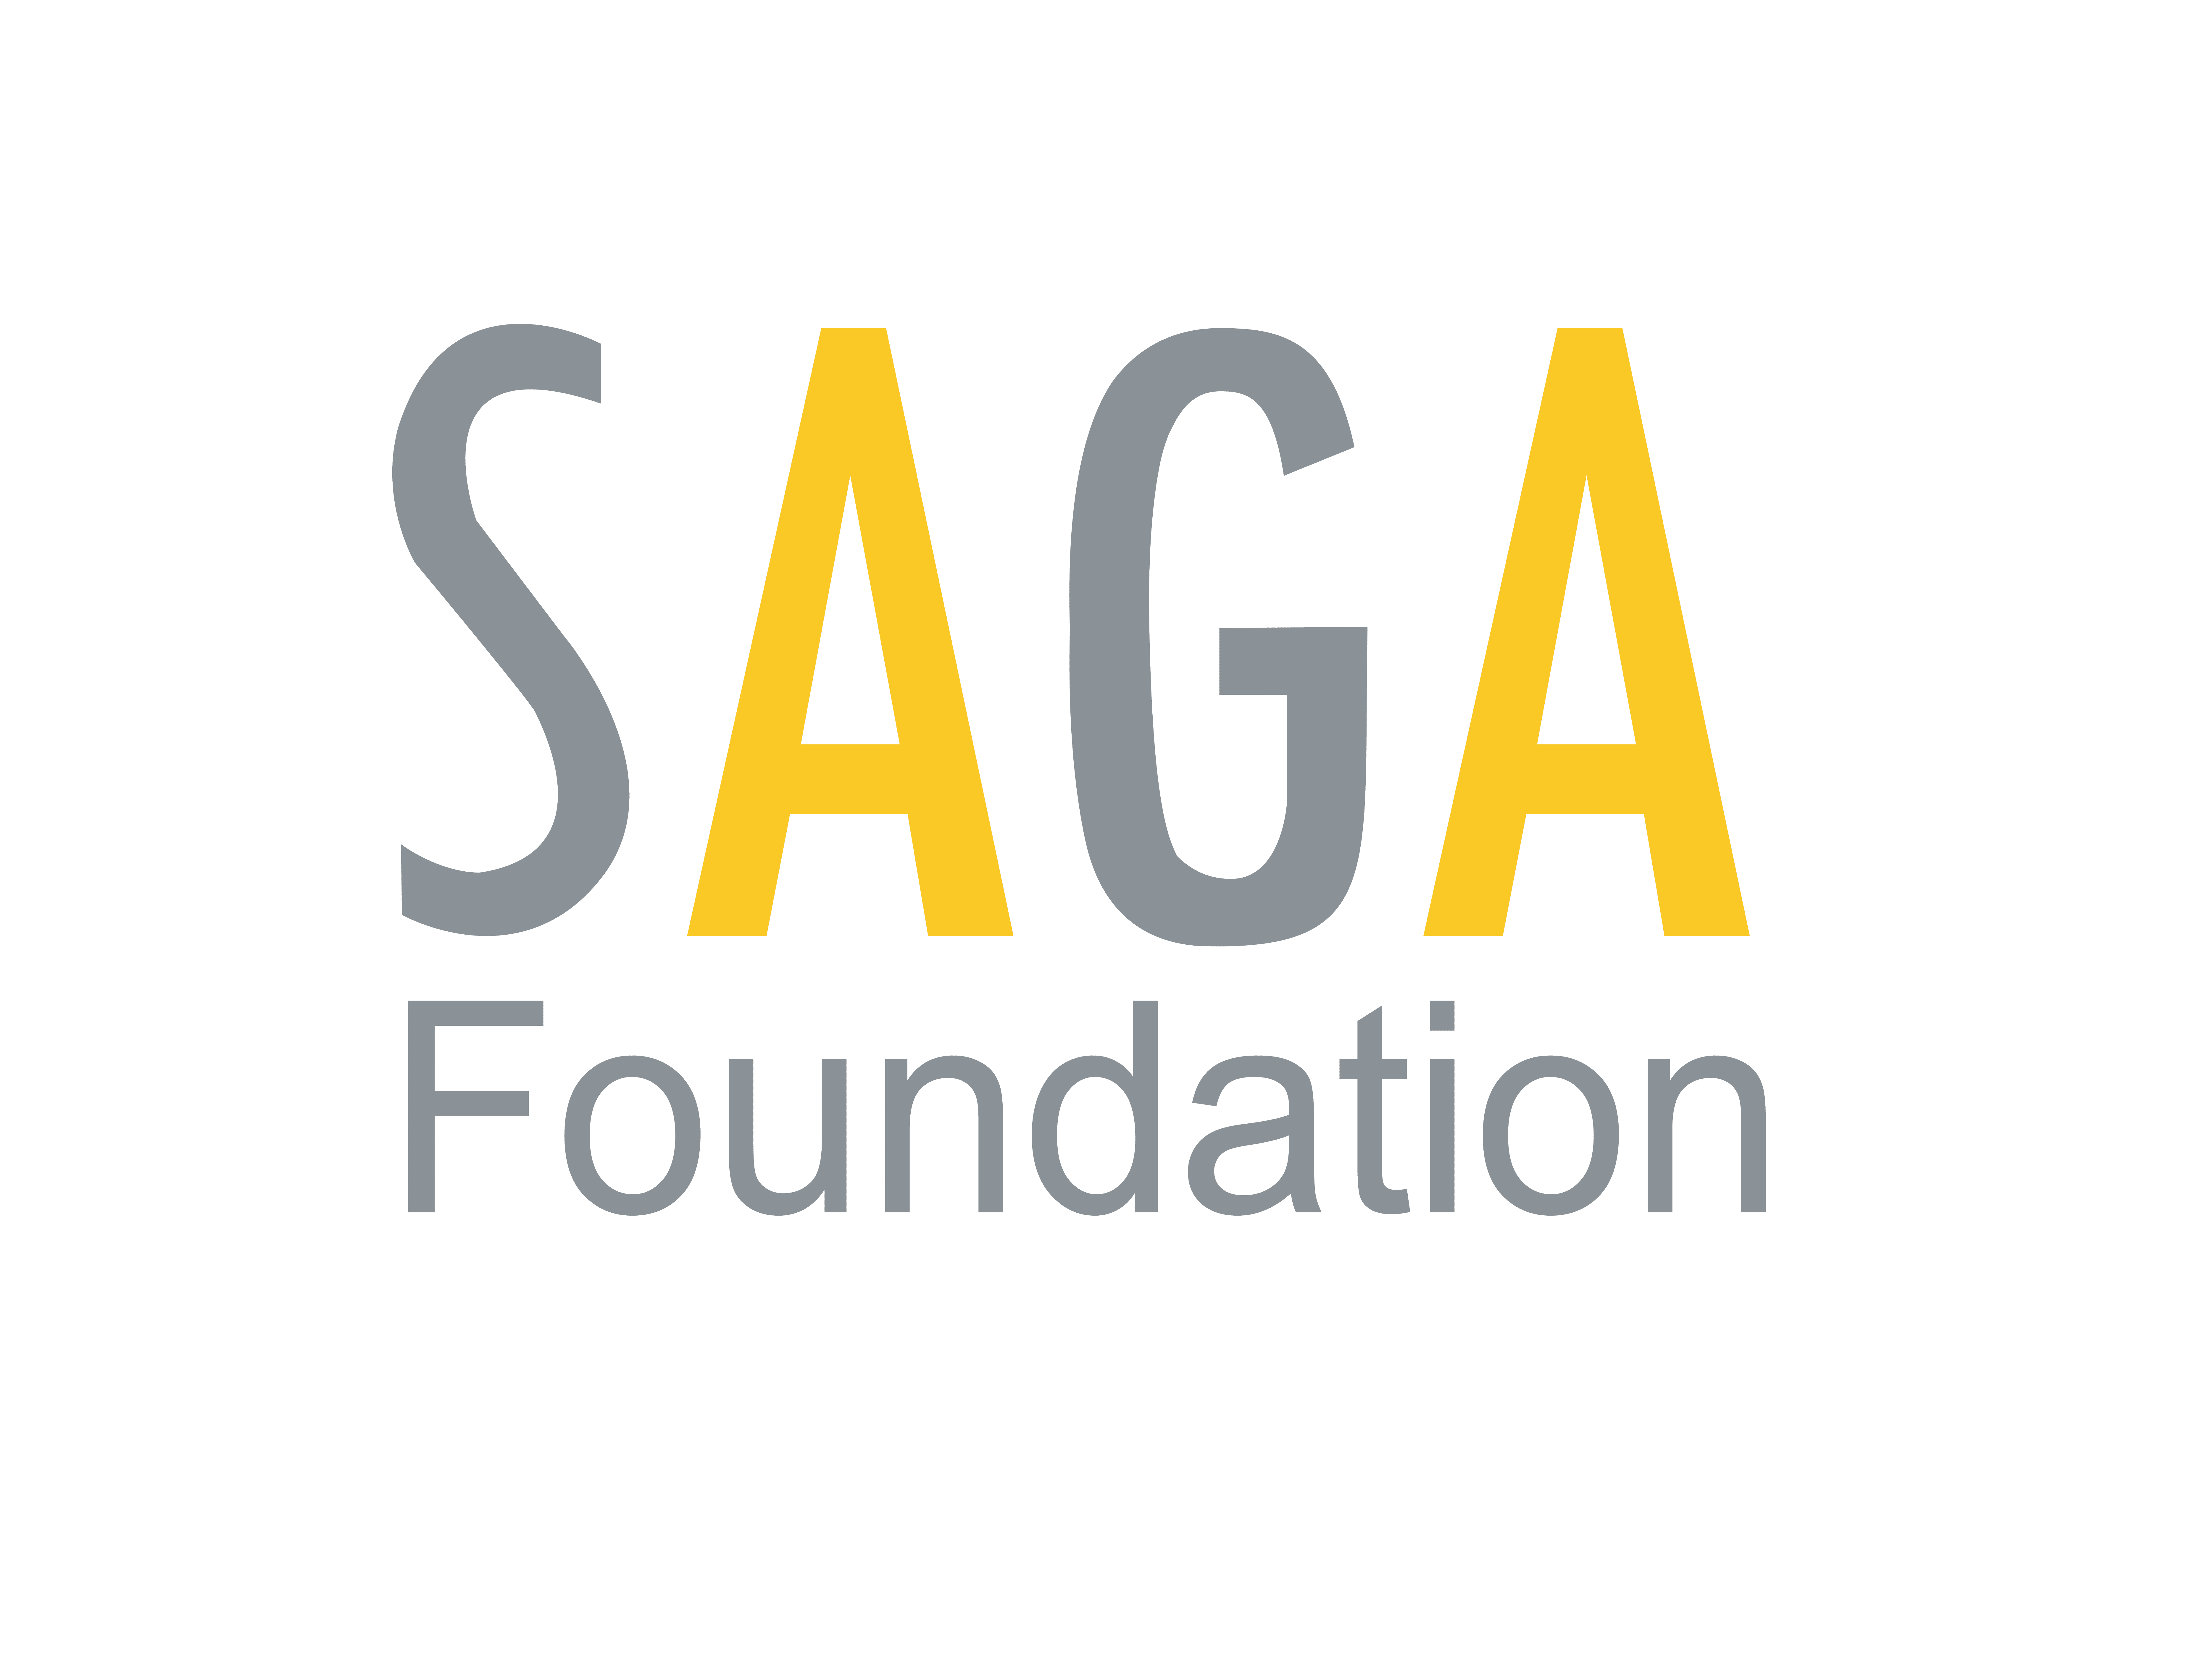 SAGA Foundation Creates A Platform To Increase Awareness Of The Global South Asian Art World